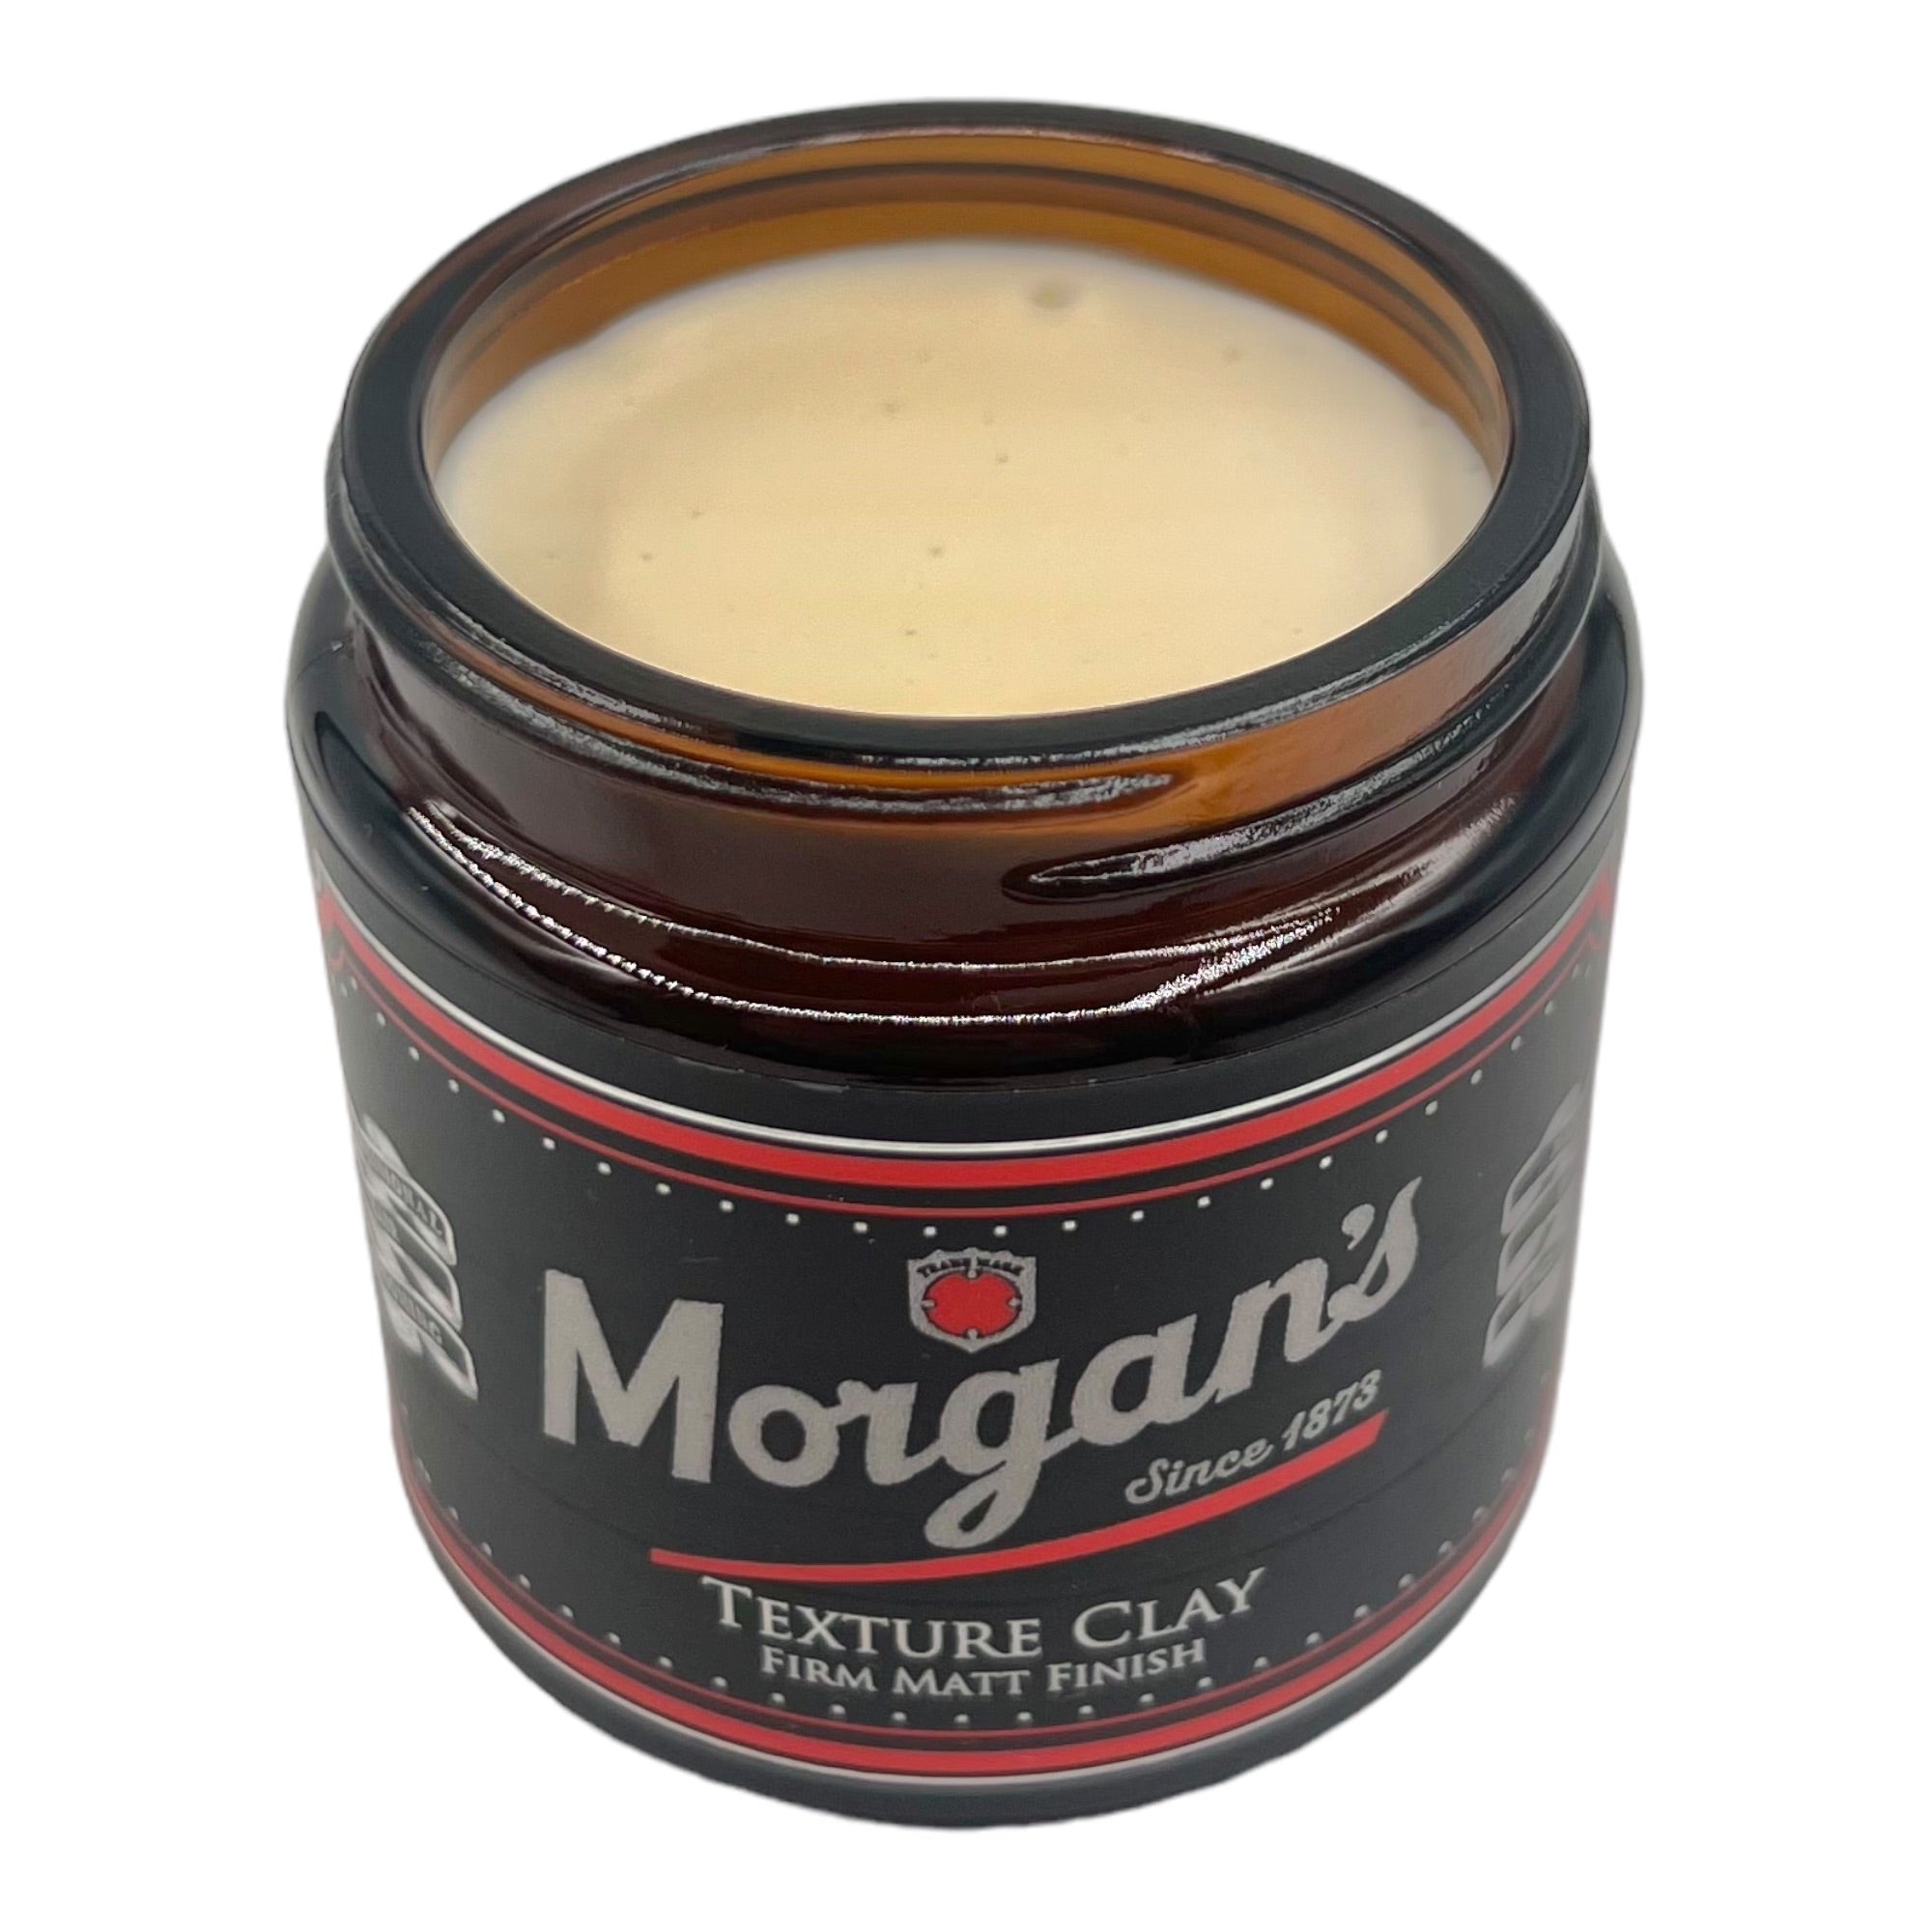 Morgan's - Texture Clay Firm Matt Finish 120ml